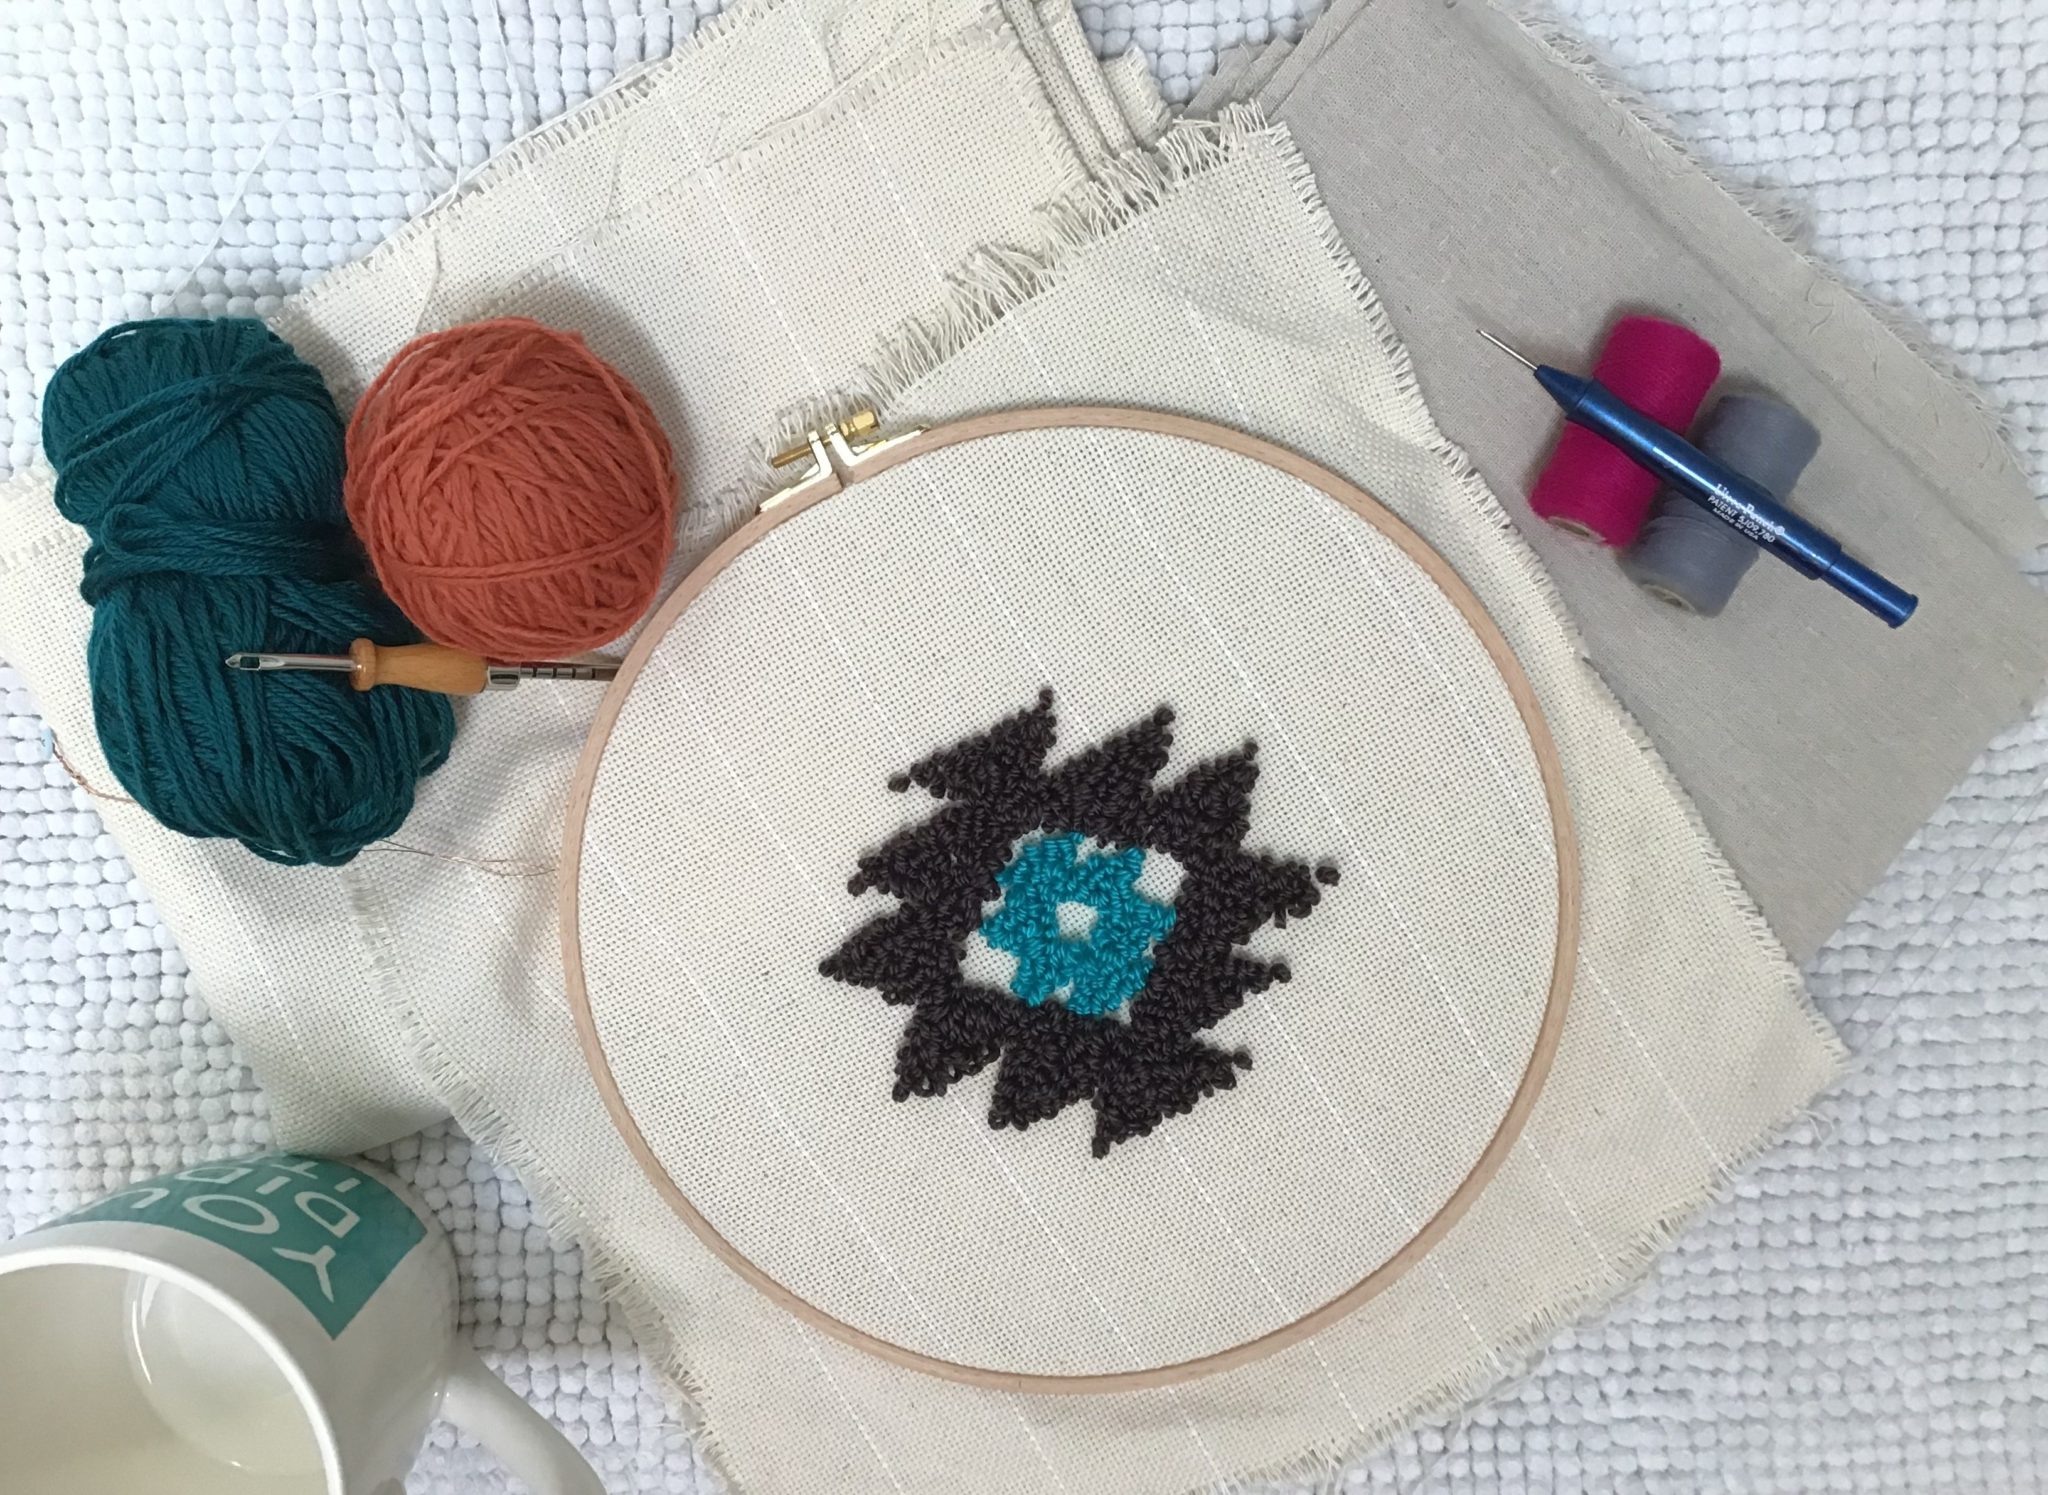 Nurge Punchneedle Embroidery Hoop ~ No. 6 – Hobby House Needleworks